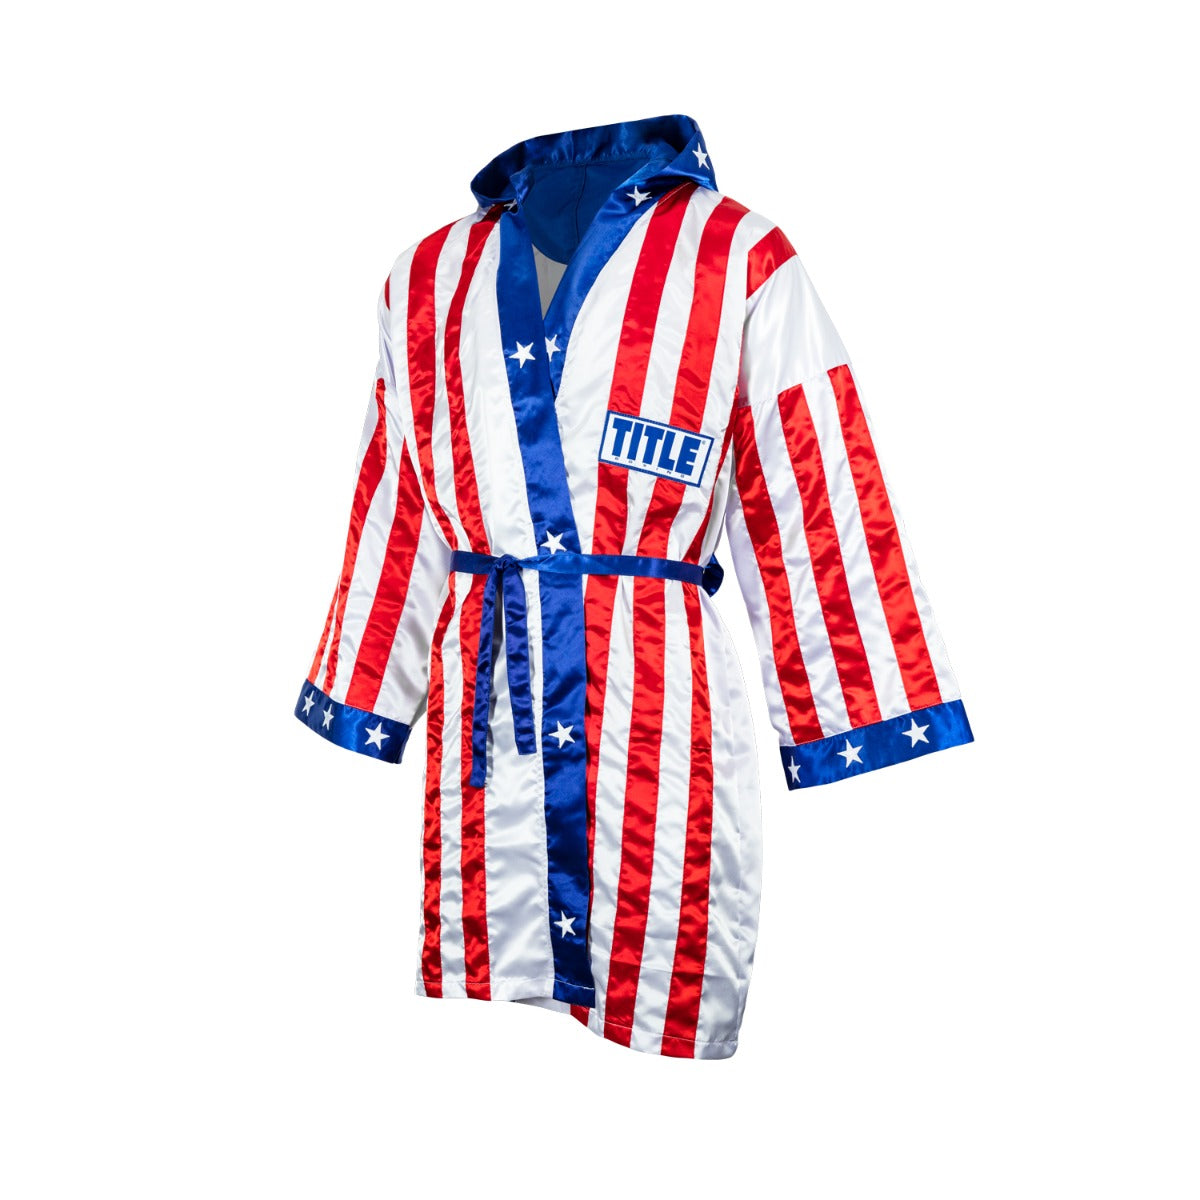 TITLE USA Stock Boxing Robe